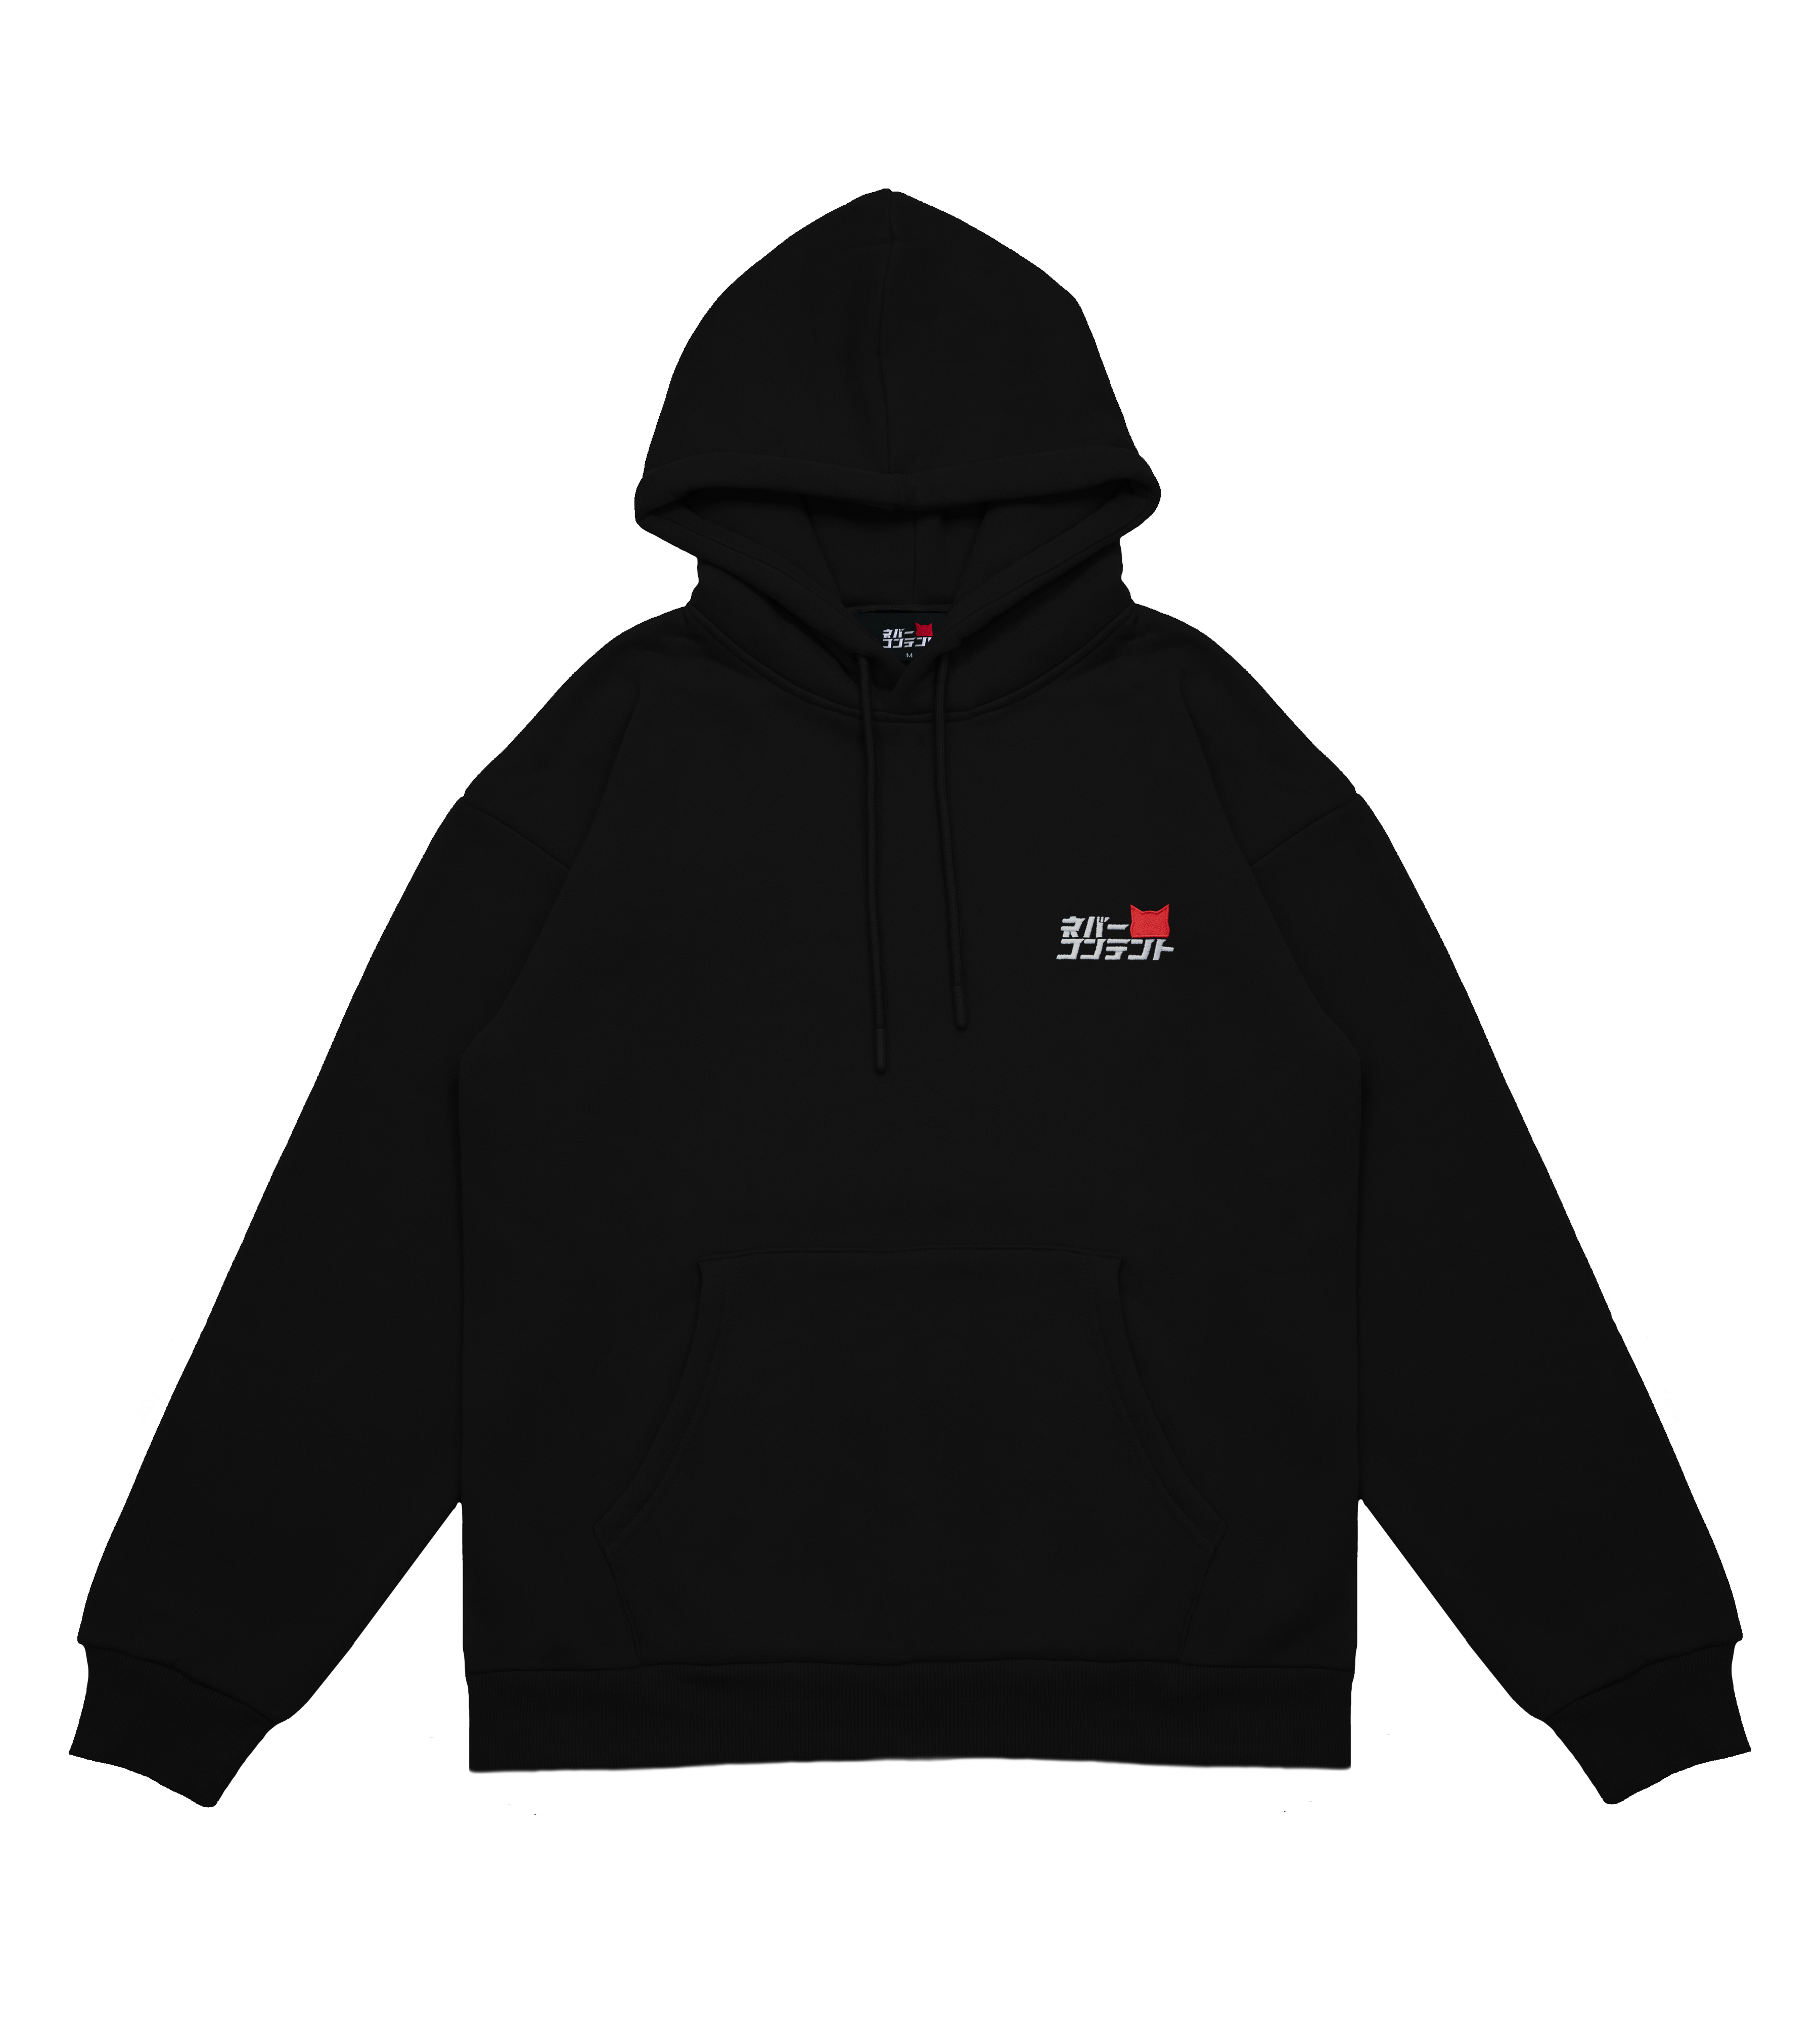 CSB (Embroidered) - Black Hooded Sweatshirt